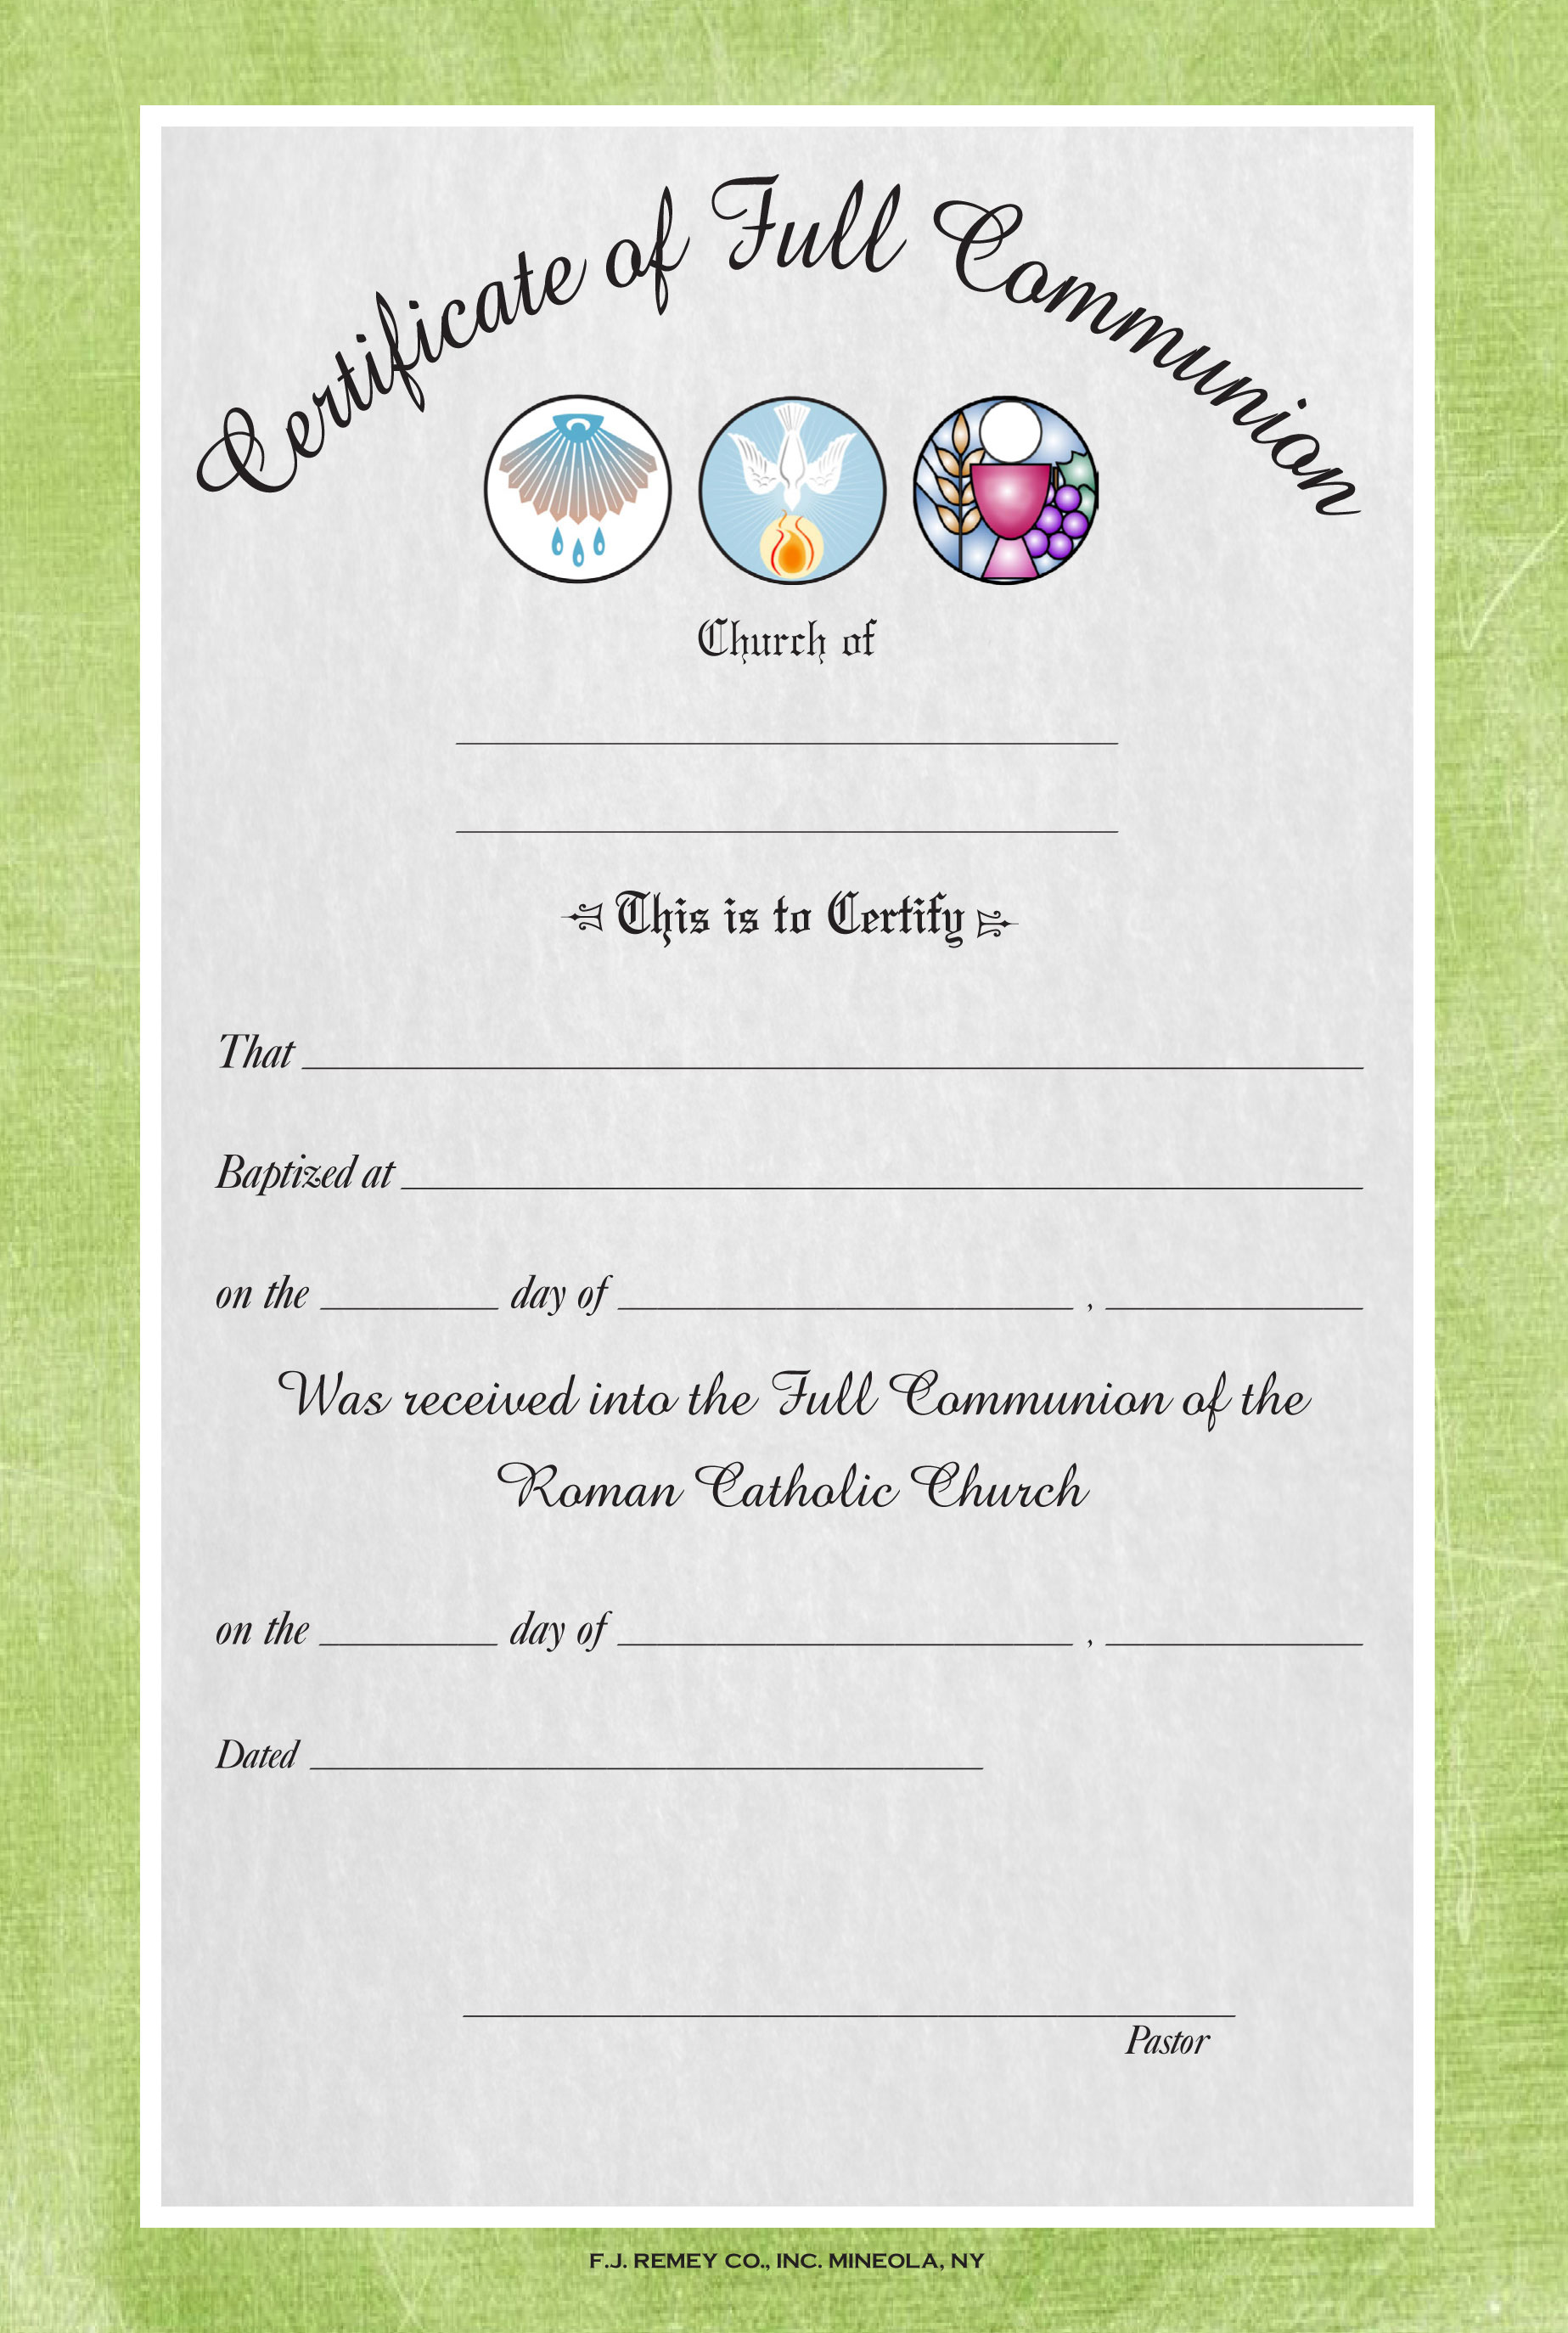 Certificate of Full Communion